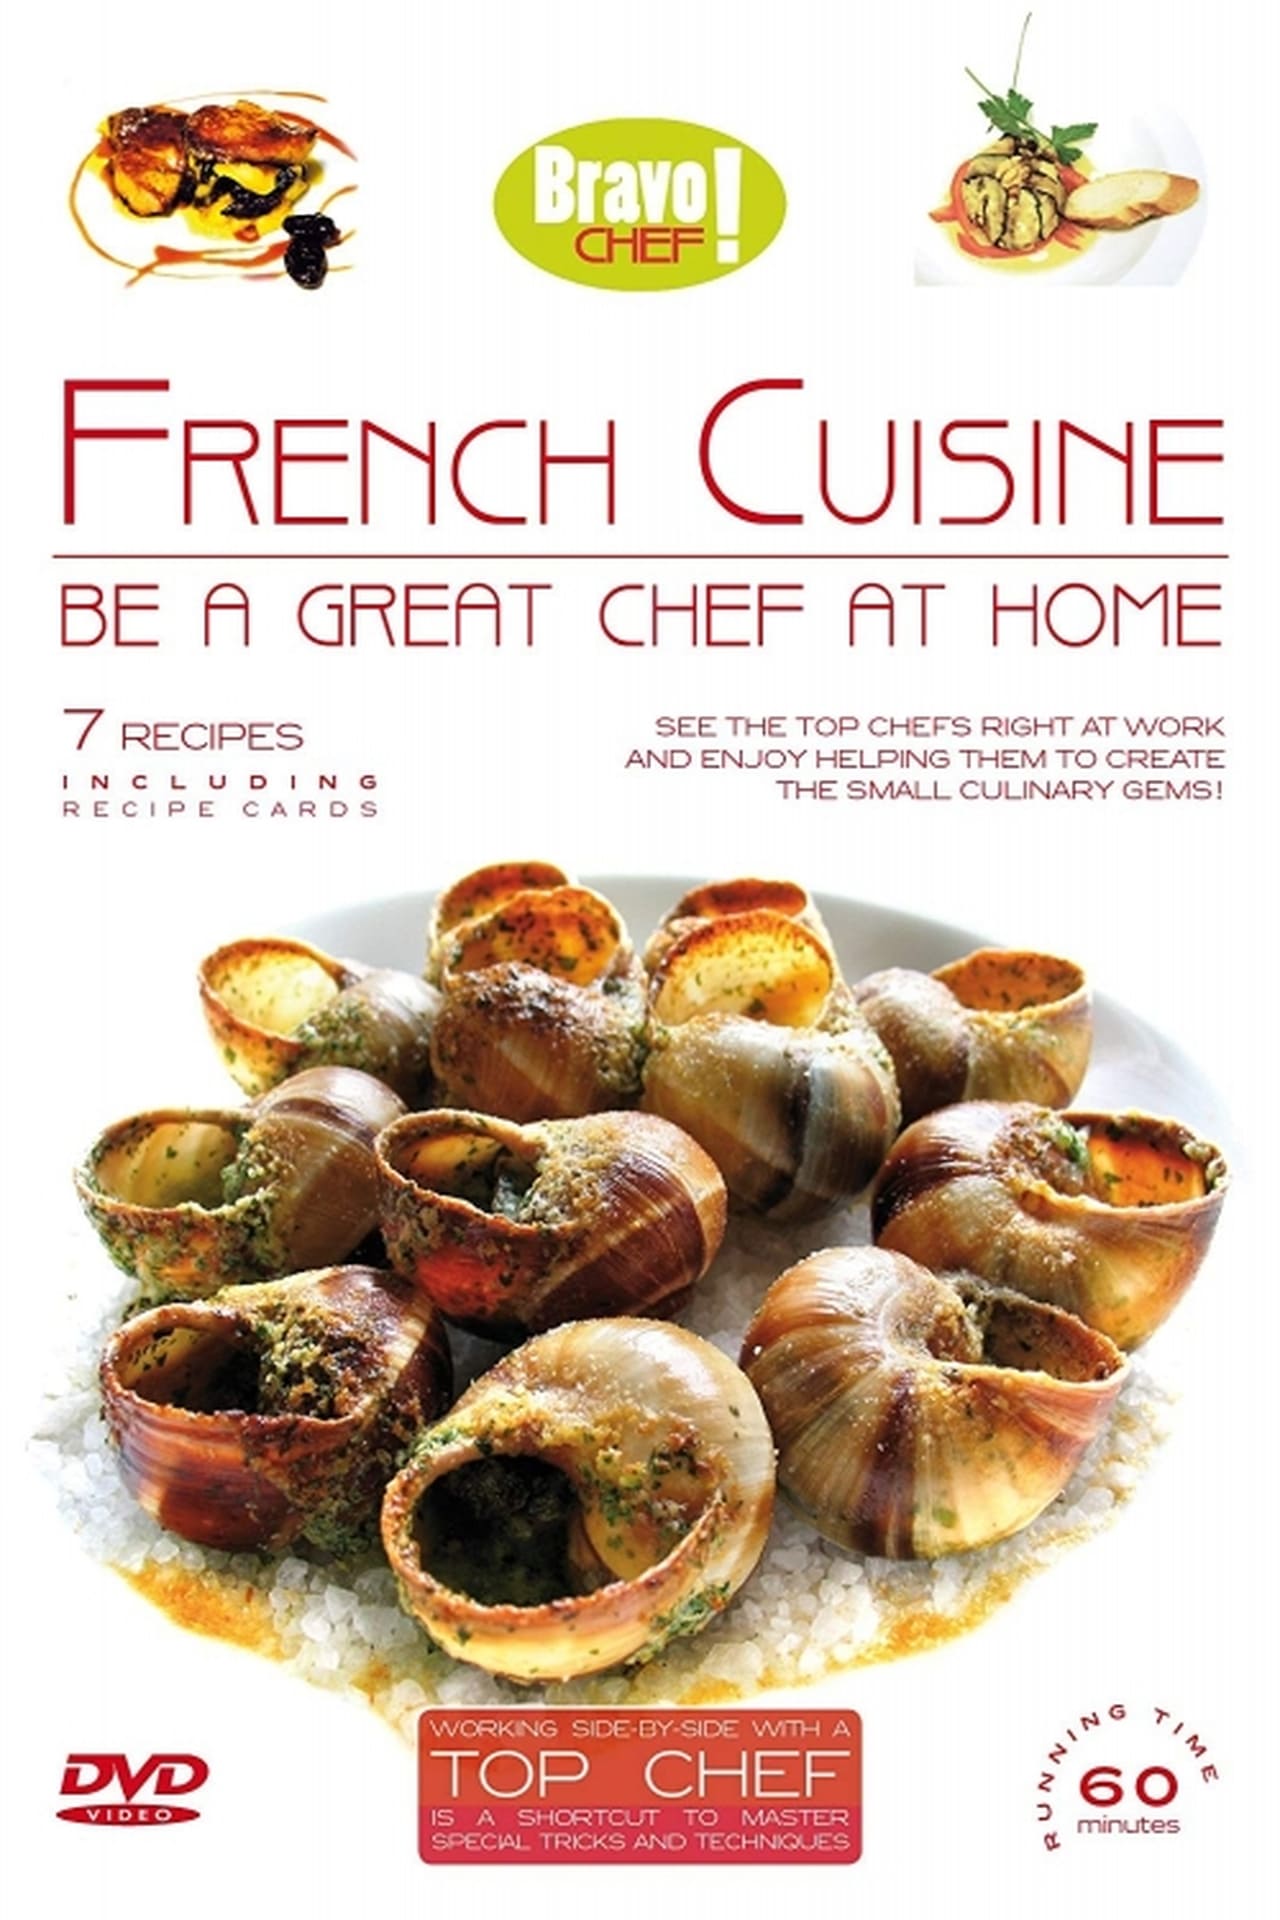 Bravo Chef: French Cuisine